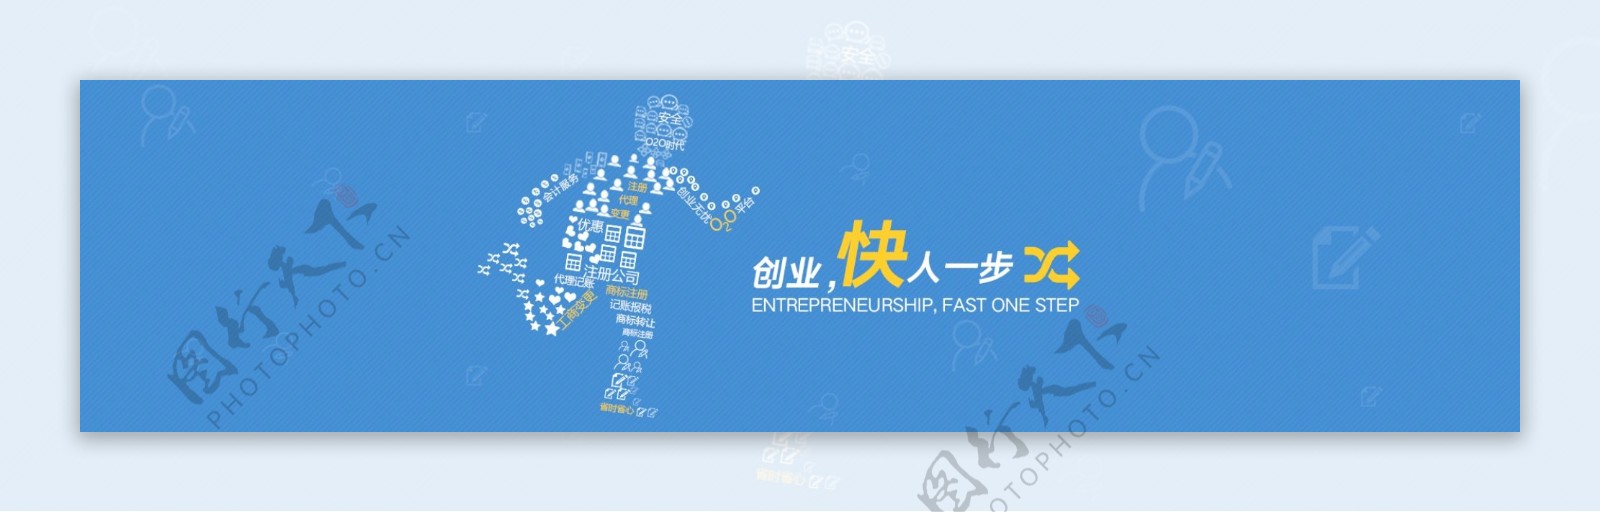 创业金融banner